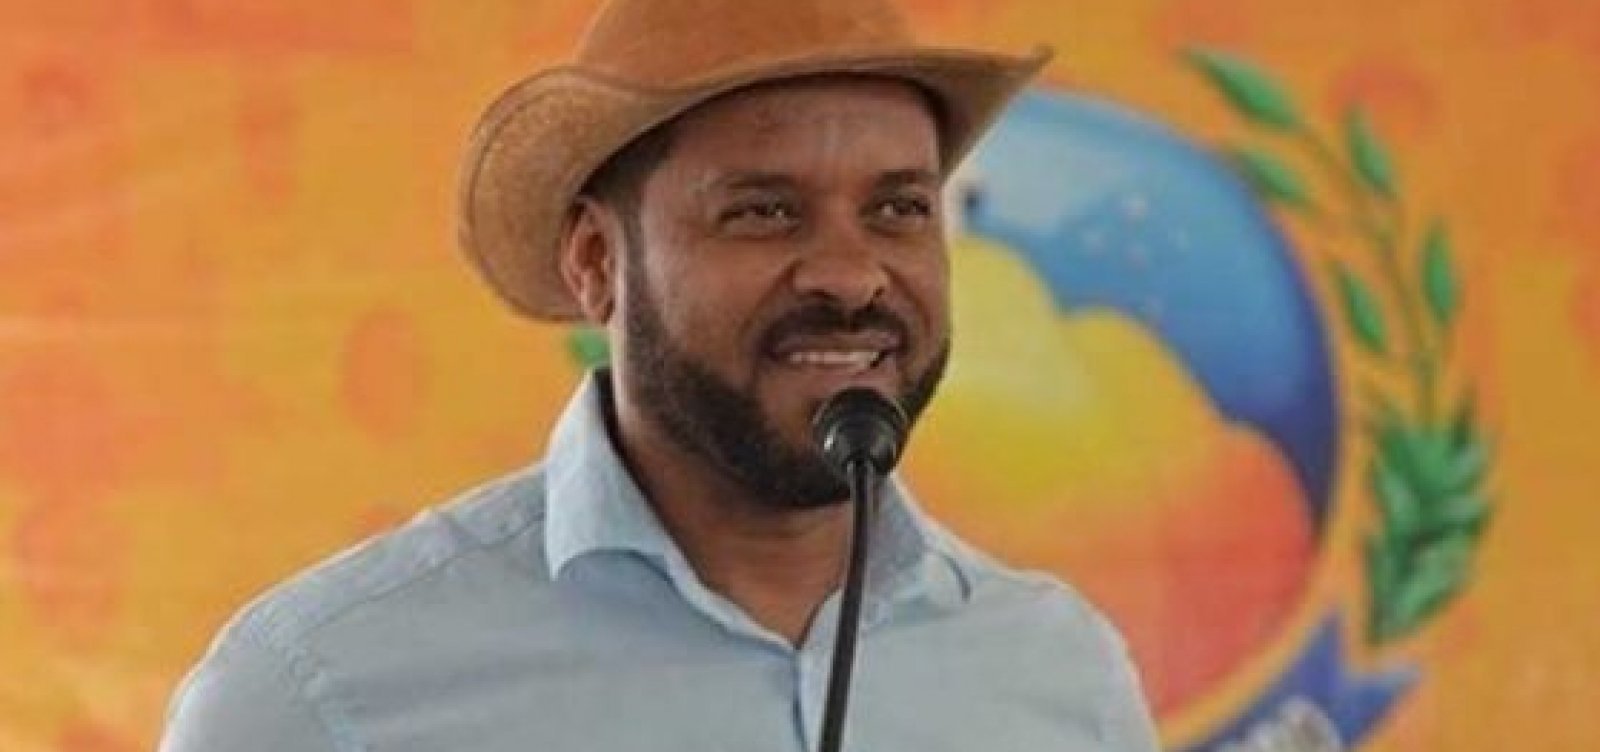 Vereador flagrado agredindo jornalista no norte da Bahia renuncia mandato